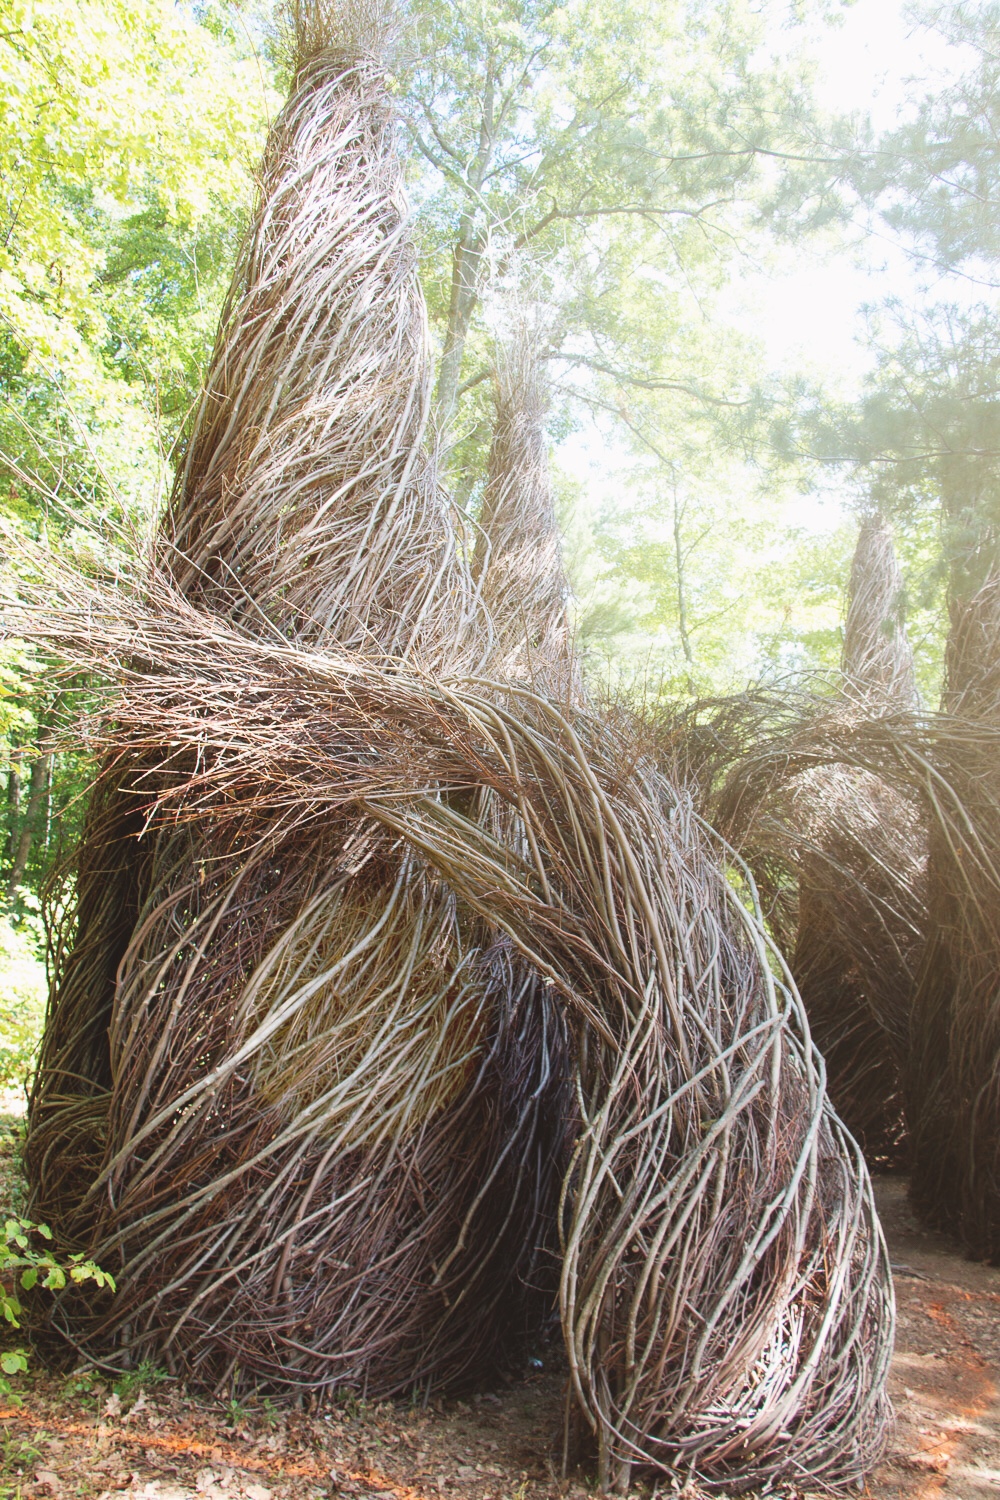 Patrick Doughertry sculpture at tower hill botanic garden- photo: rochelle greayer